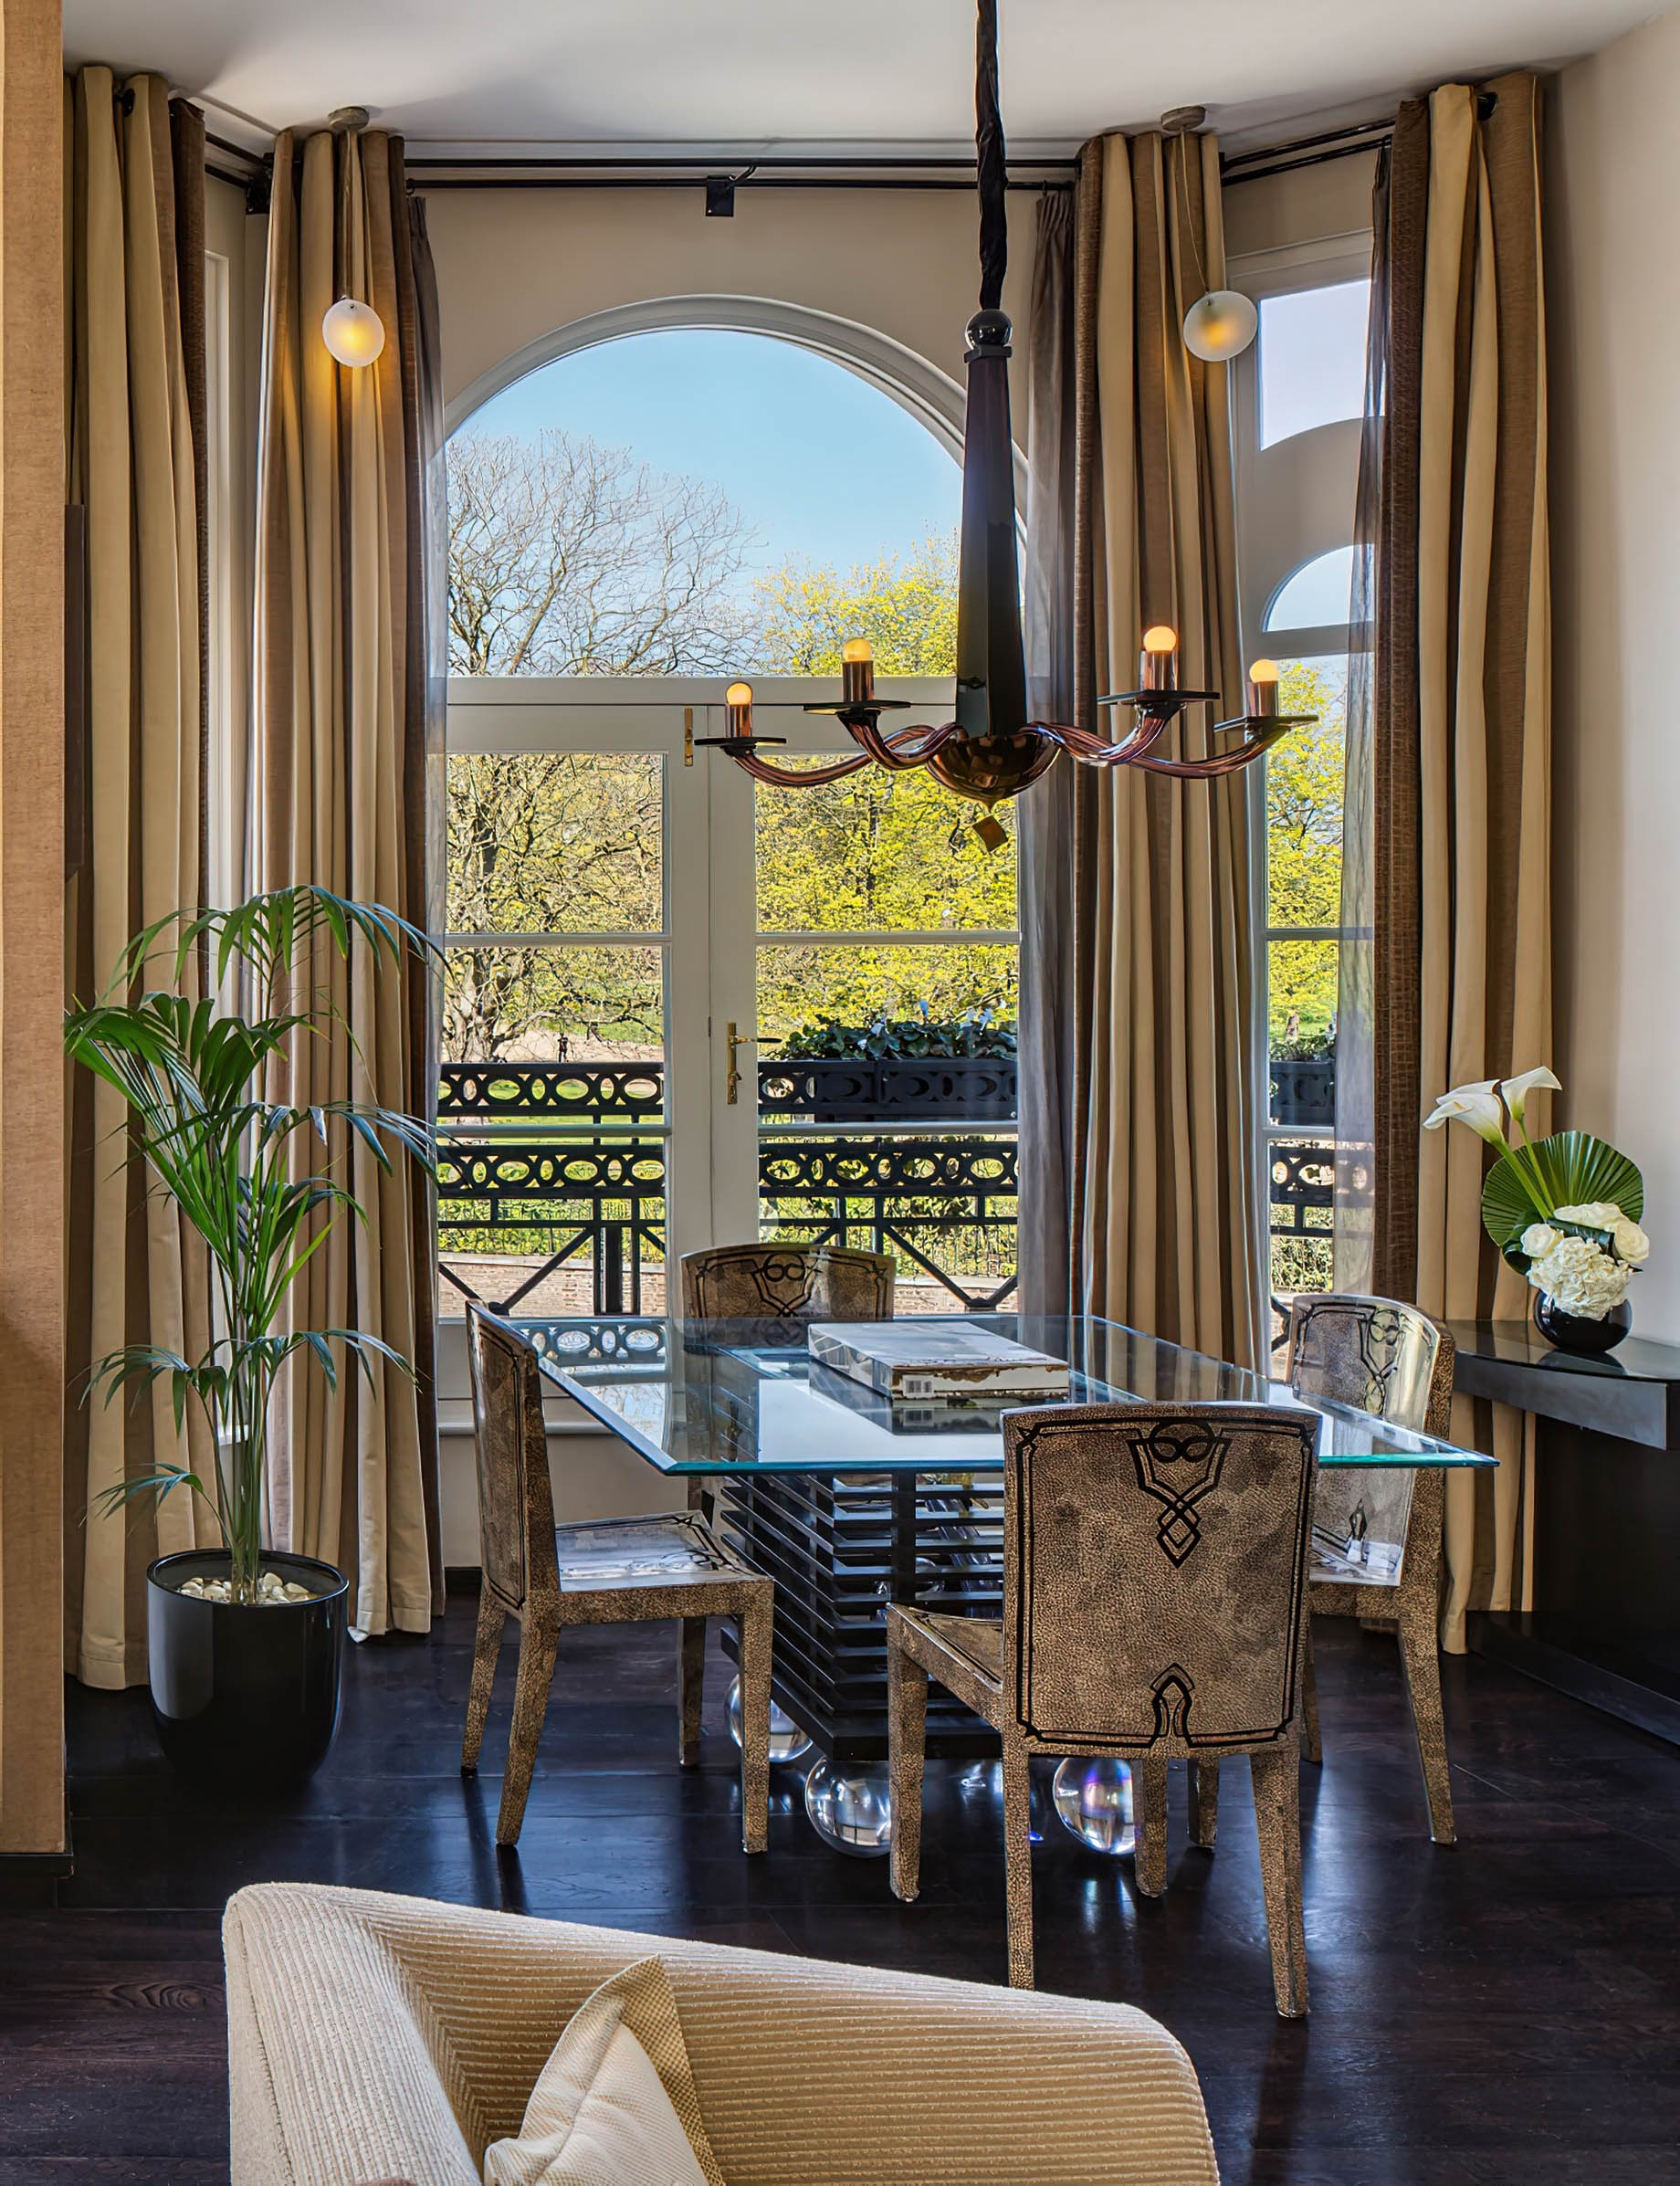 Baglioni Hotel London – South Kensington, London, United Kingdom – Presidential Suite Dining Table